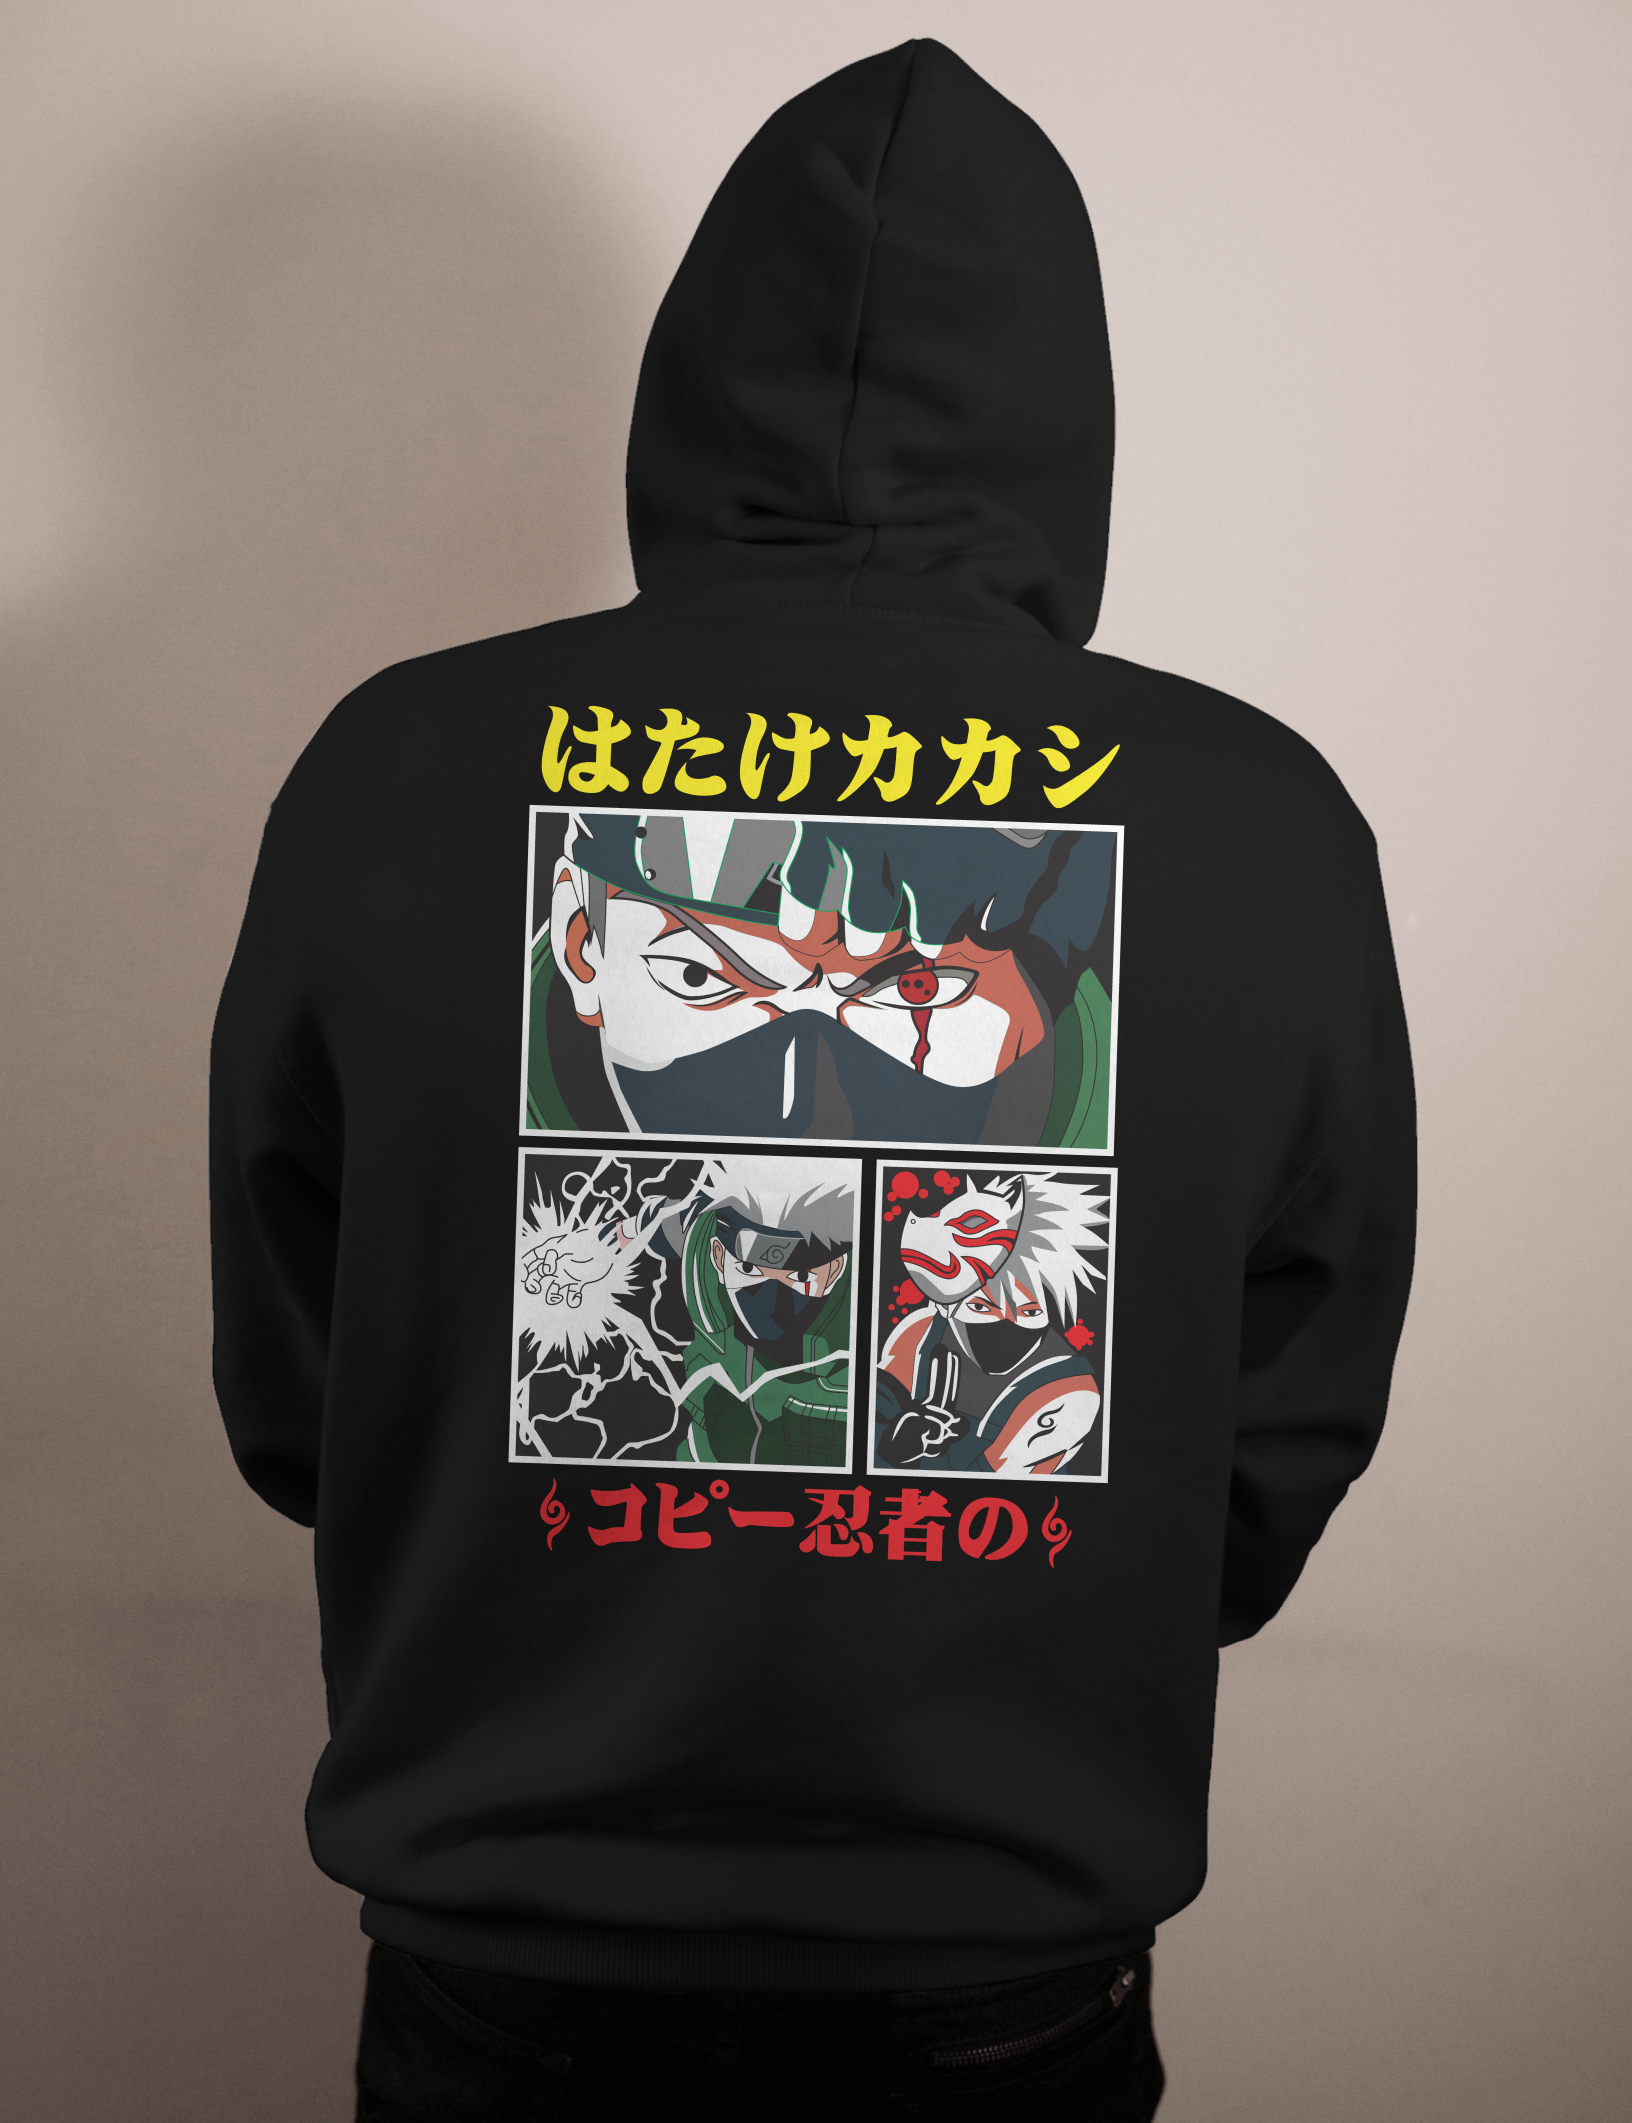 shop and buy kakashi anime clothing hoodie